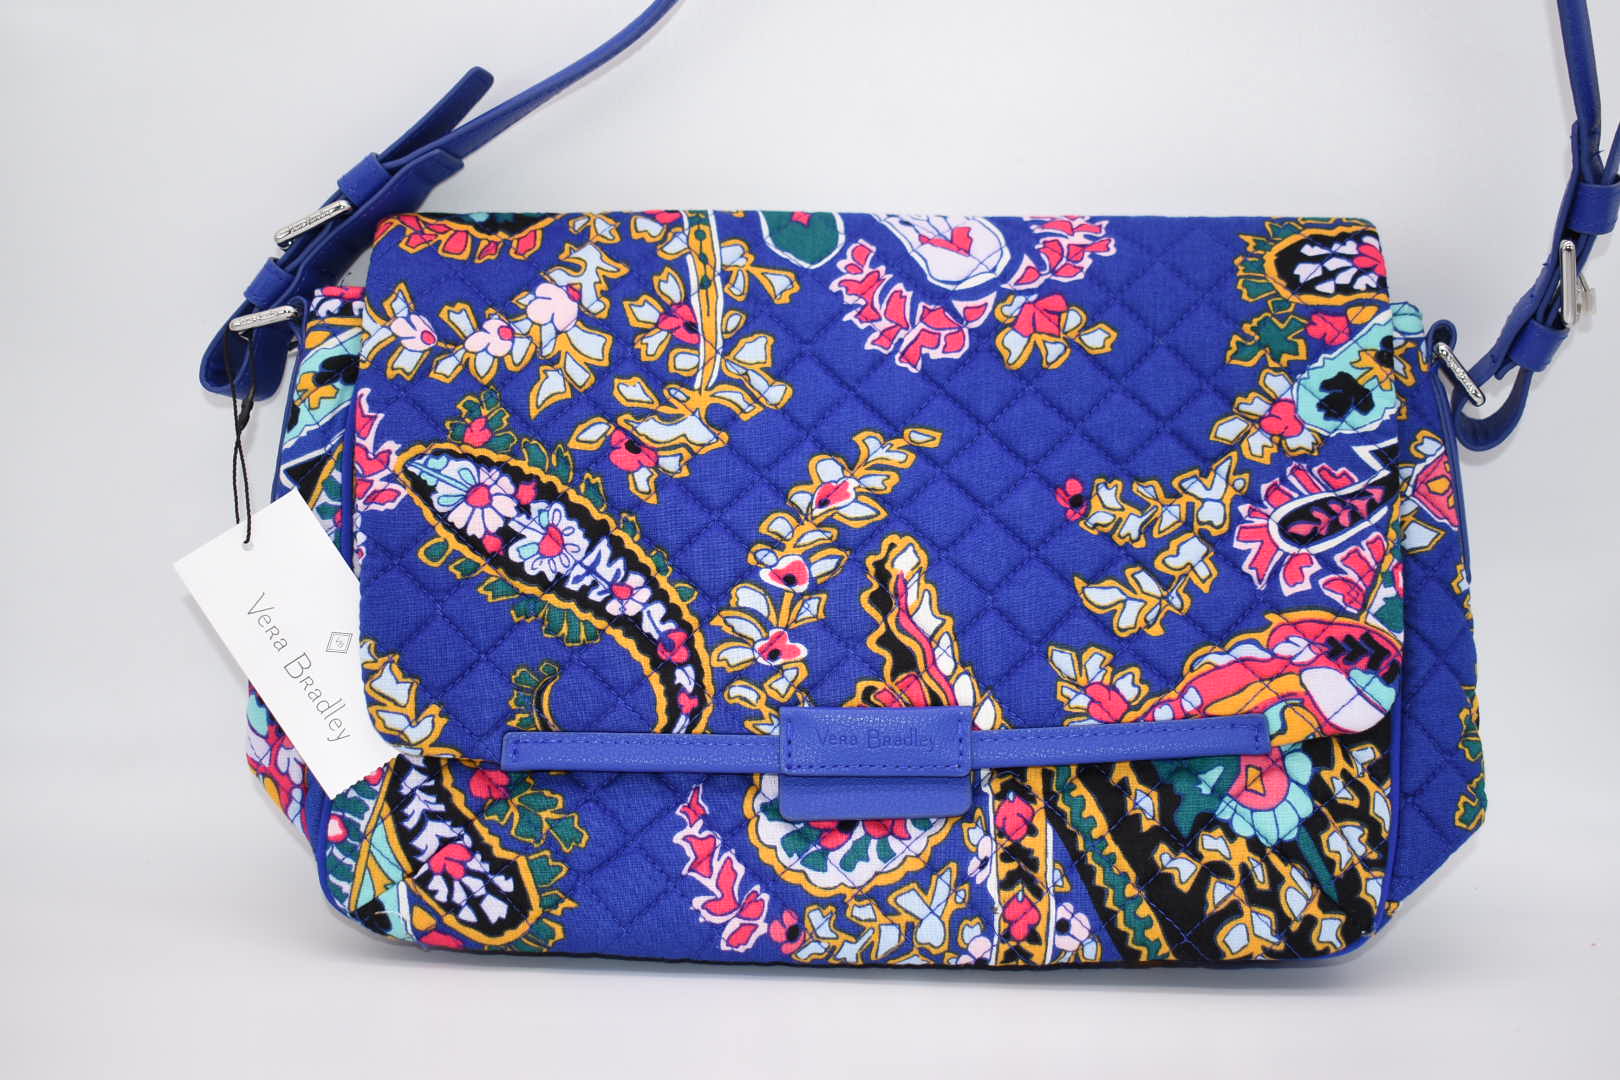 Vera Bradley Shoulder Bag in Romantic Paisley Pattern – Pink